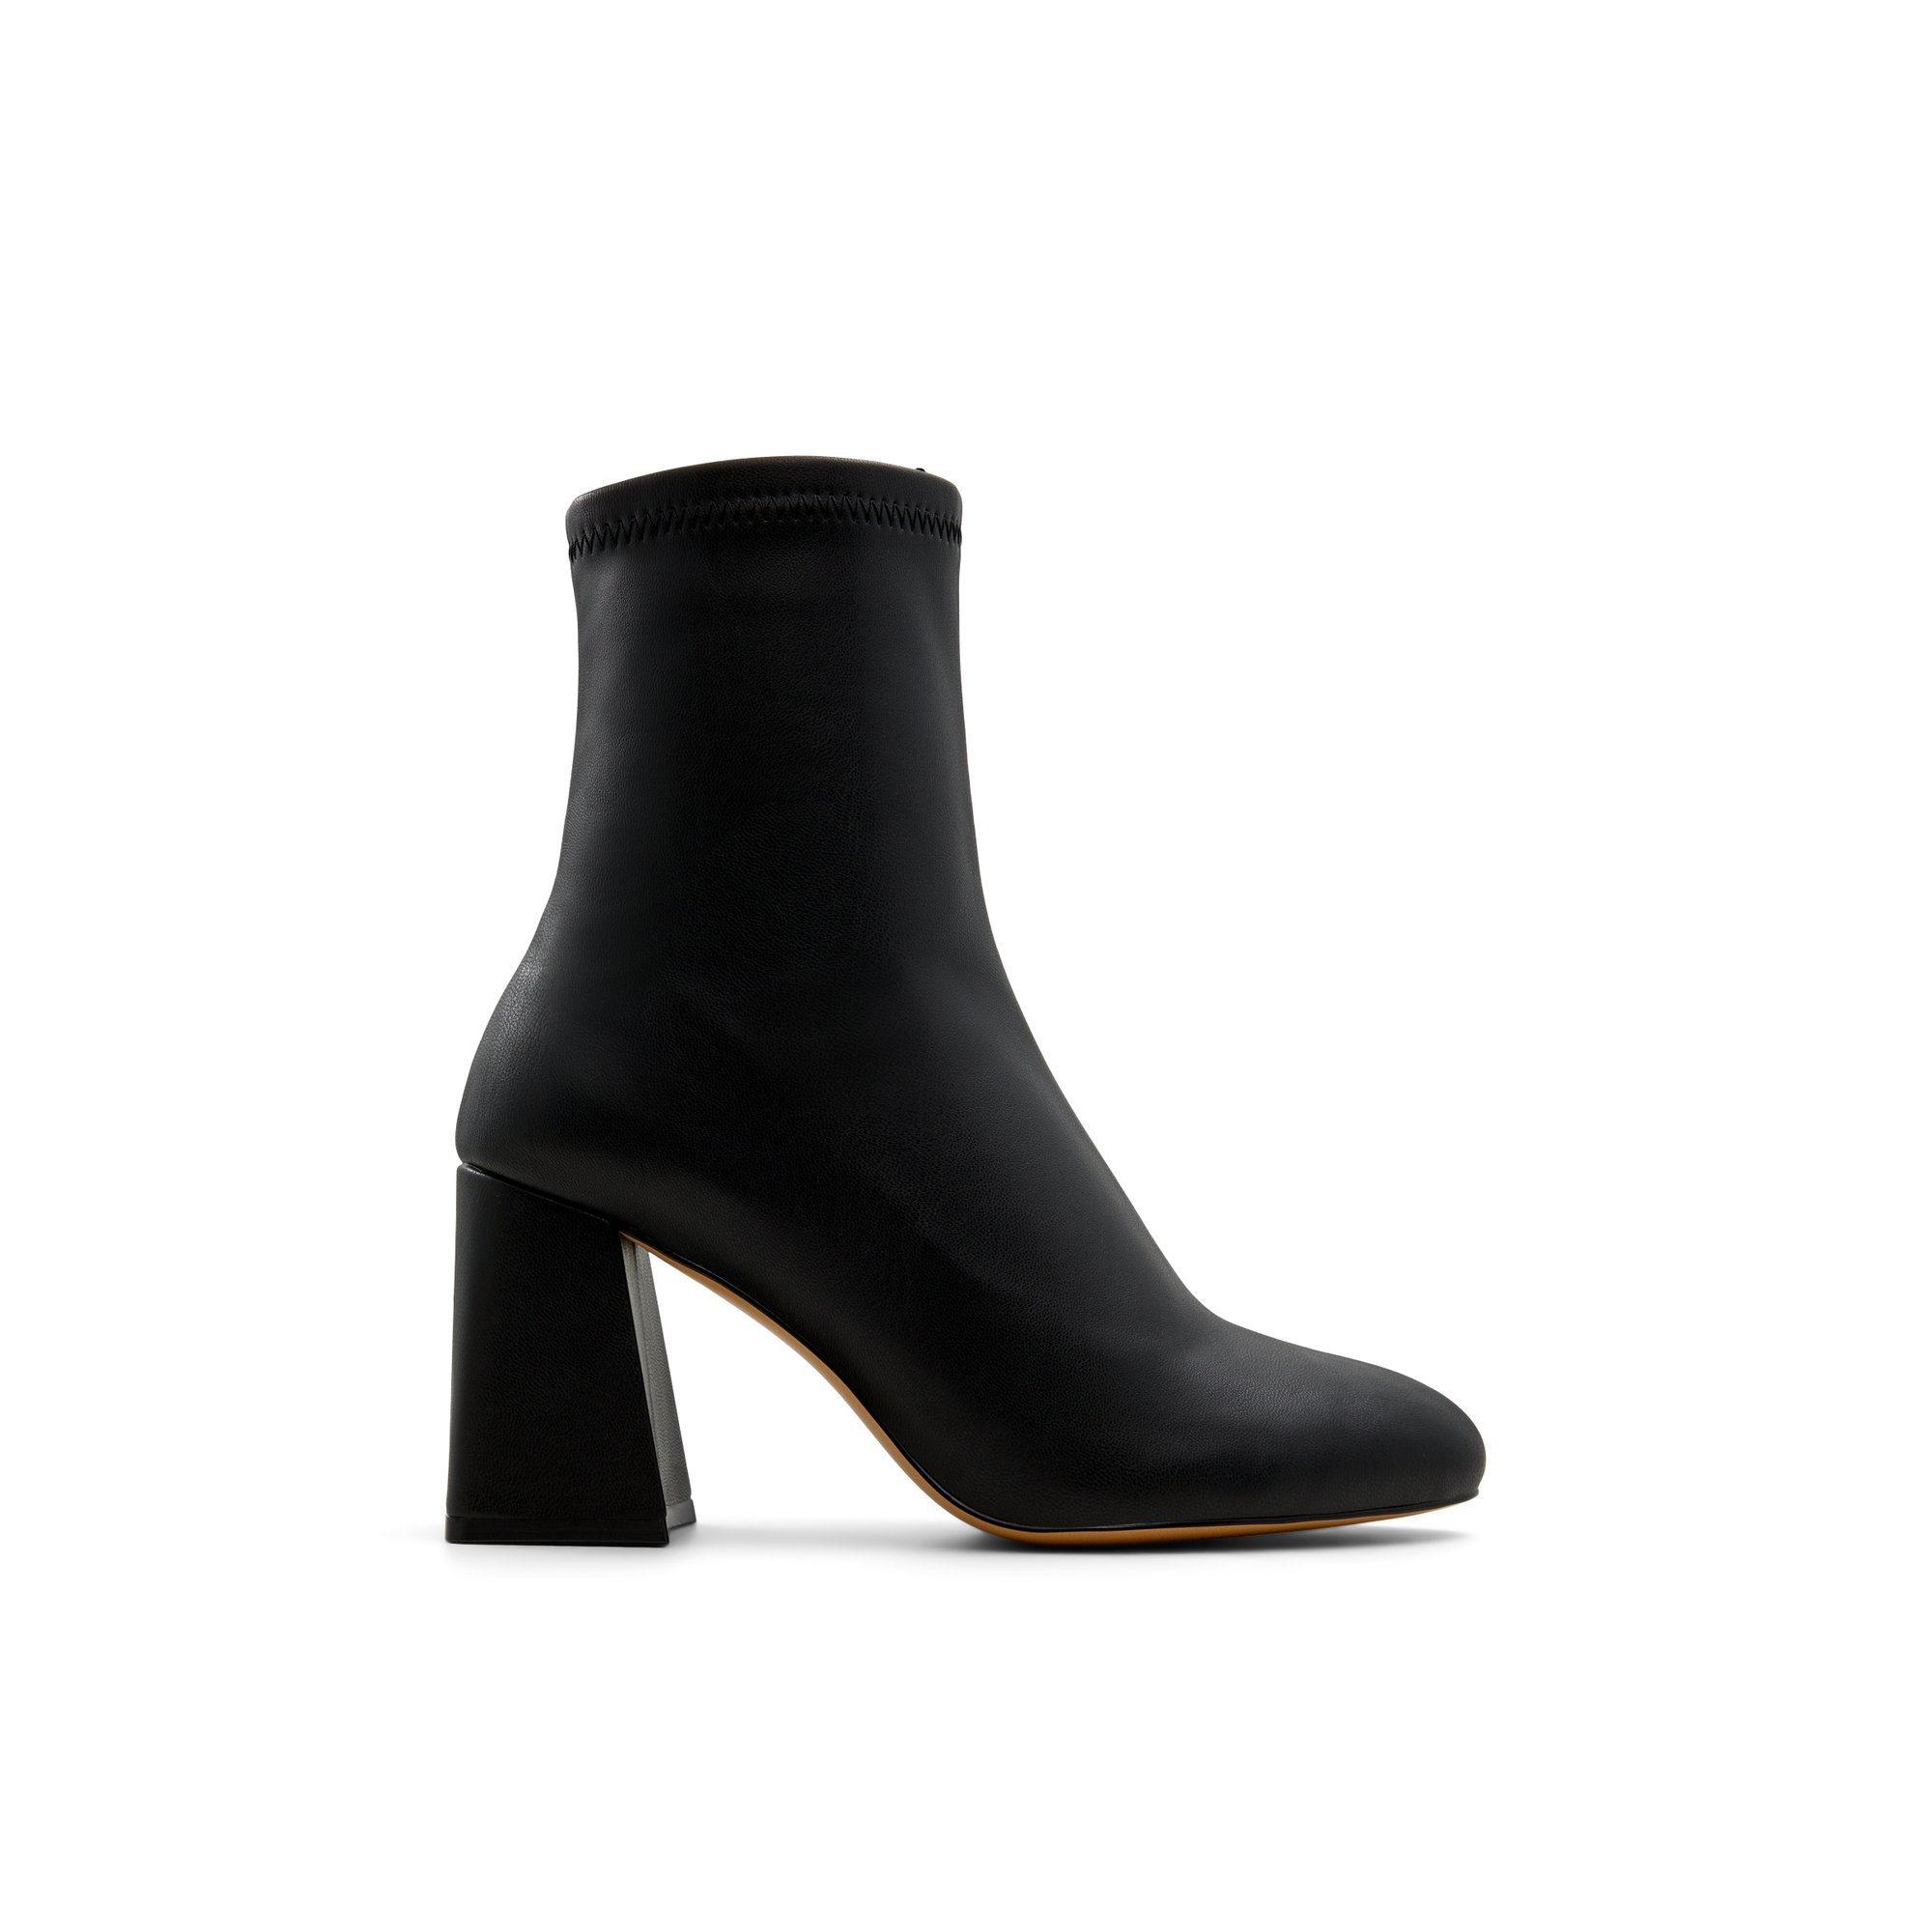 ALDO Haucan - Women's Boots Dress - Black